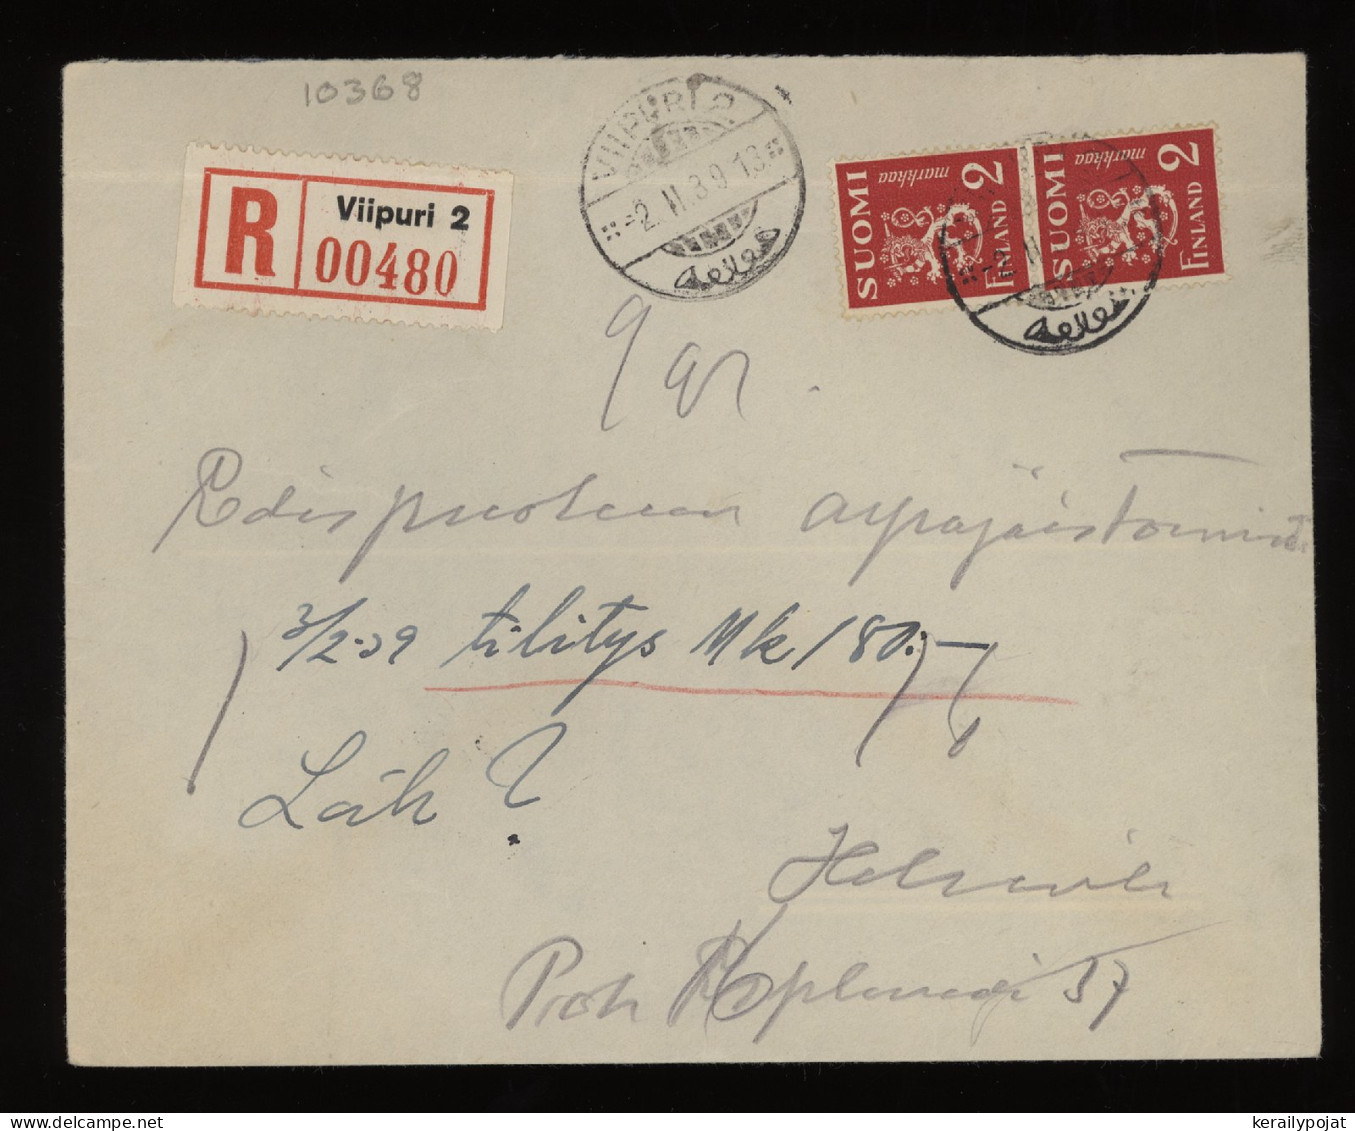 Finland 1939 Viipuri 2 Registered Cover__(10368) - Briefe U. Dokumente